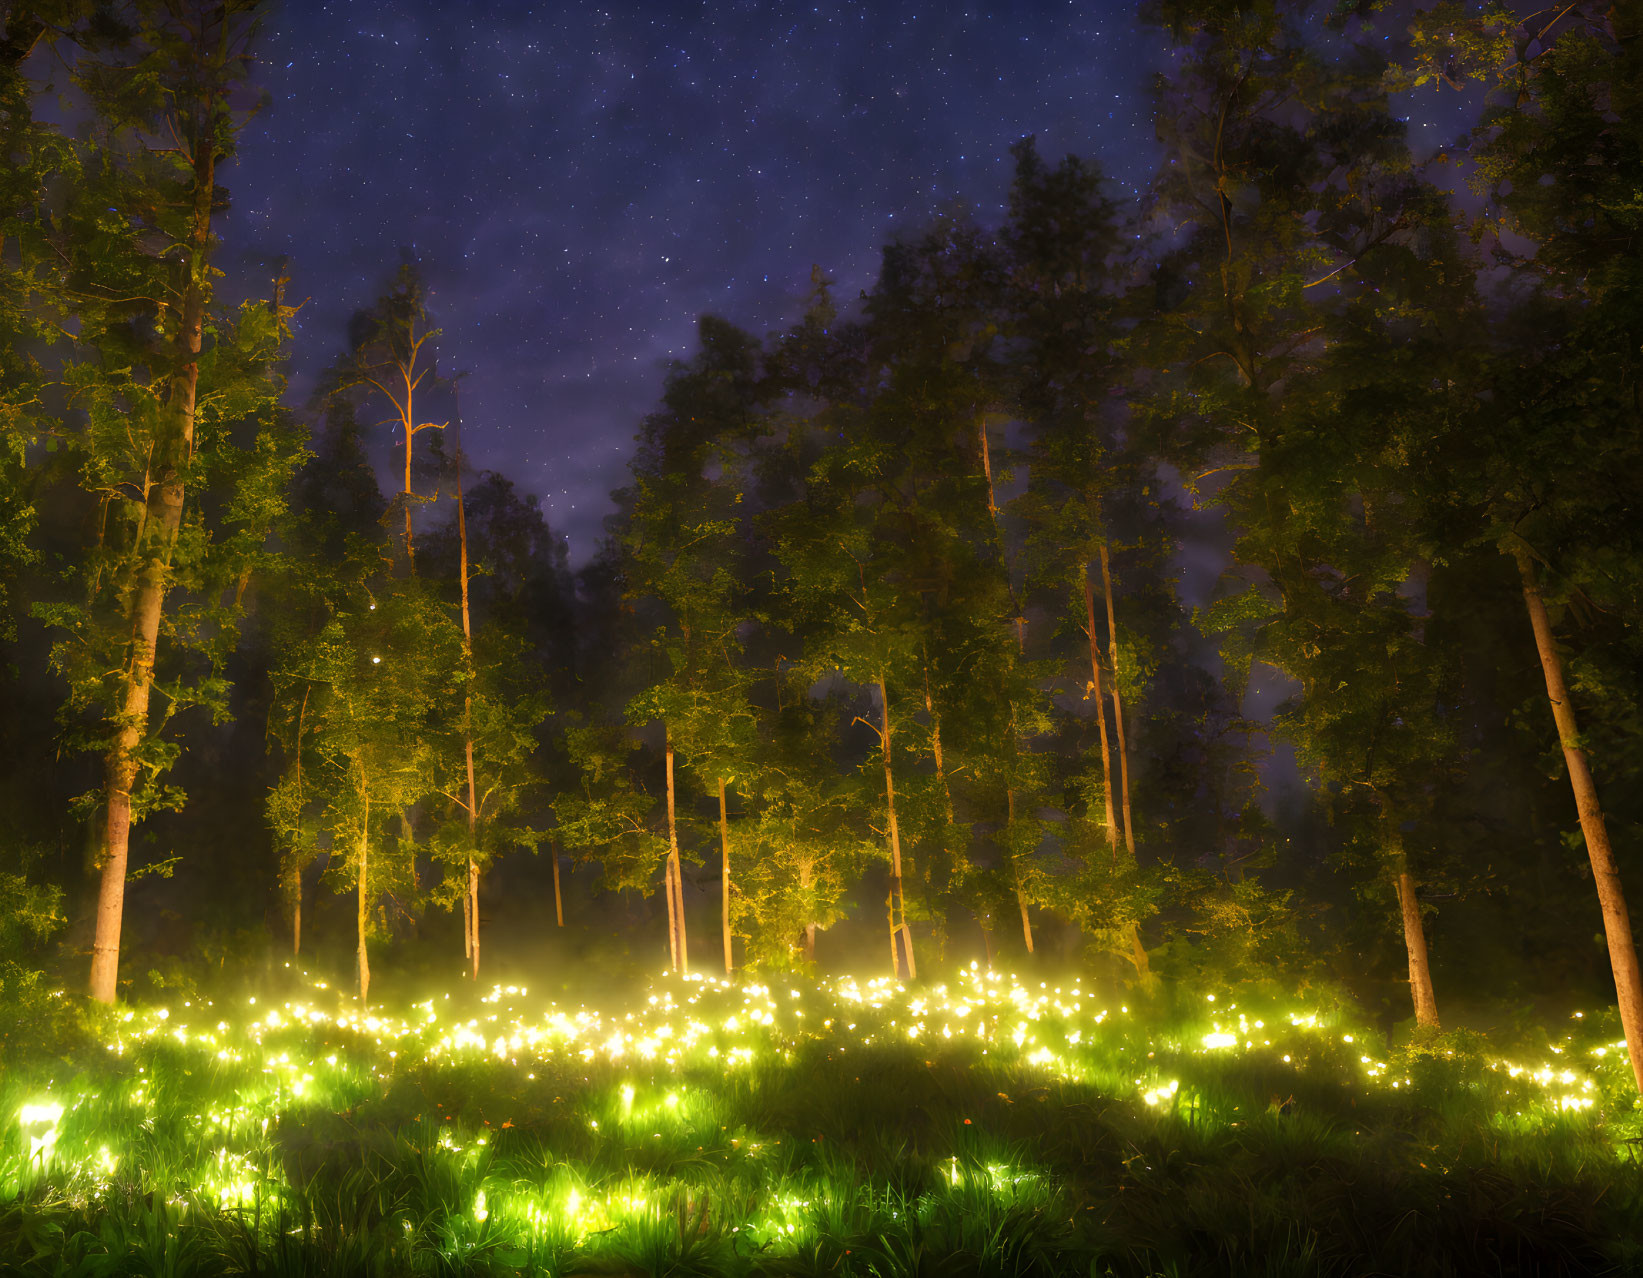 Fantastical Forest II